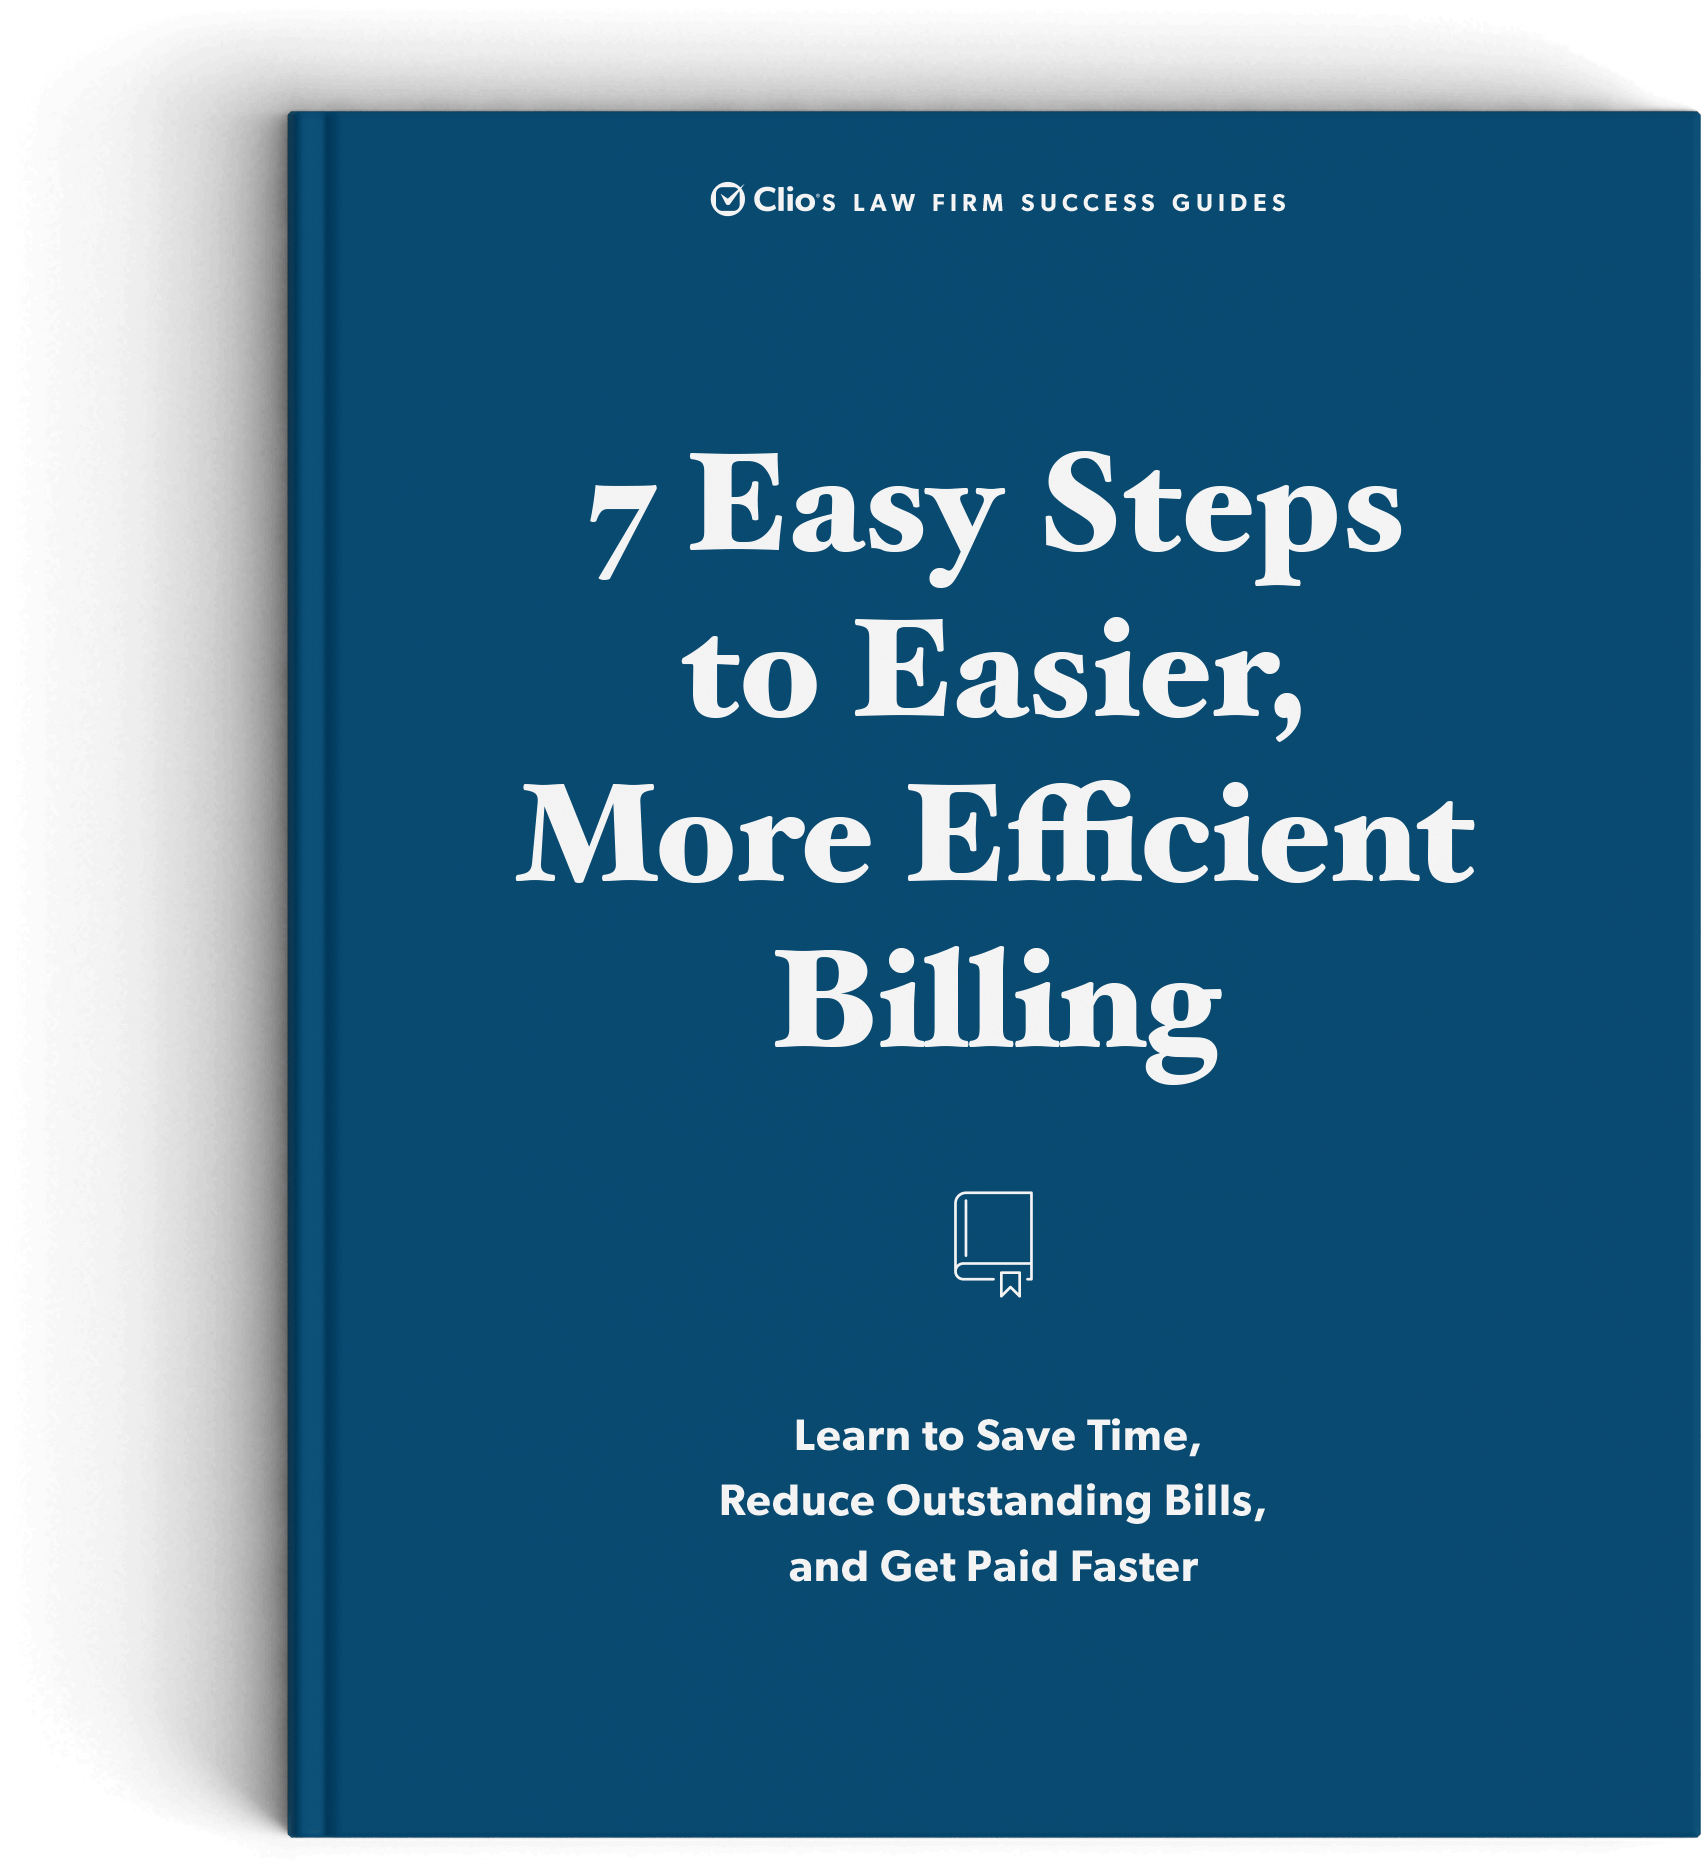 7 Easy Steps to Easier, More Efficient Billing